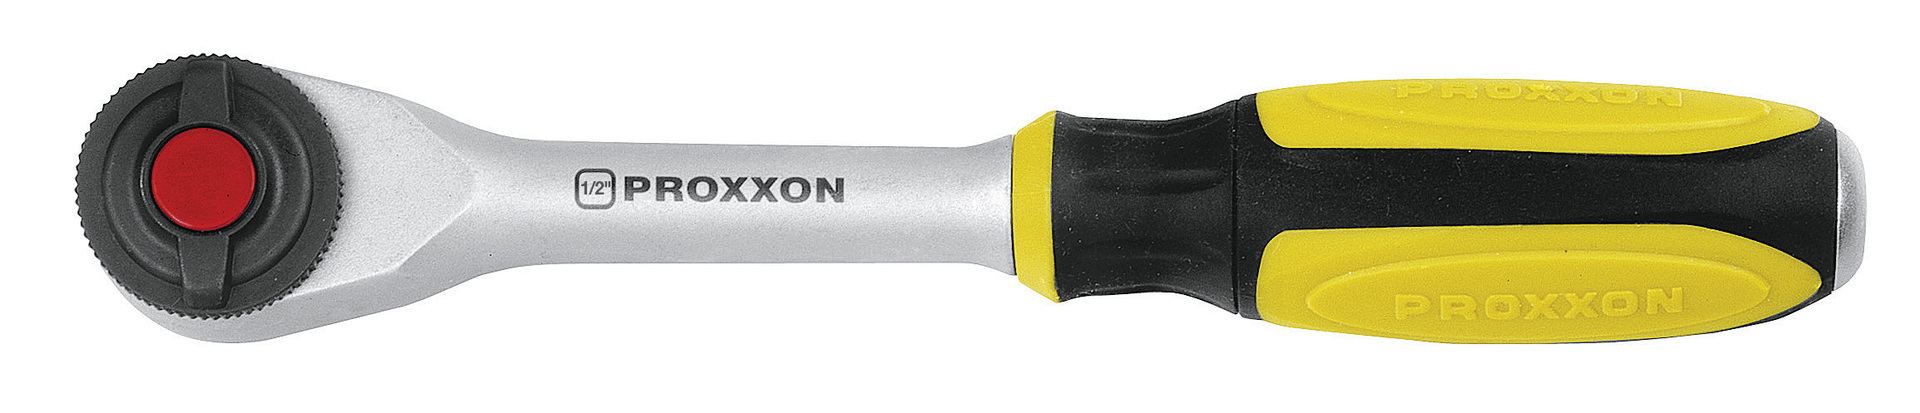 Proxxon Rotary Ratsche 6,3mm 1/4 Zoll